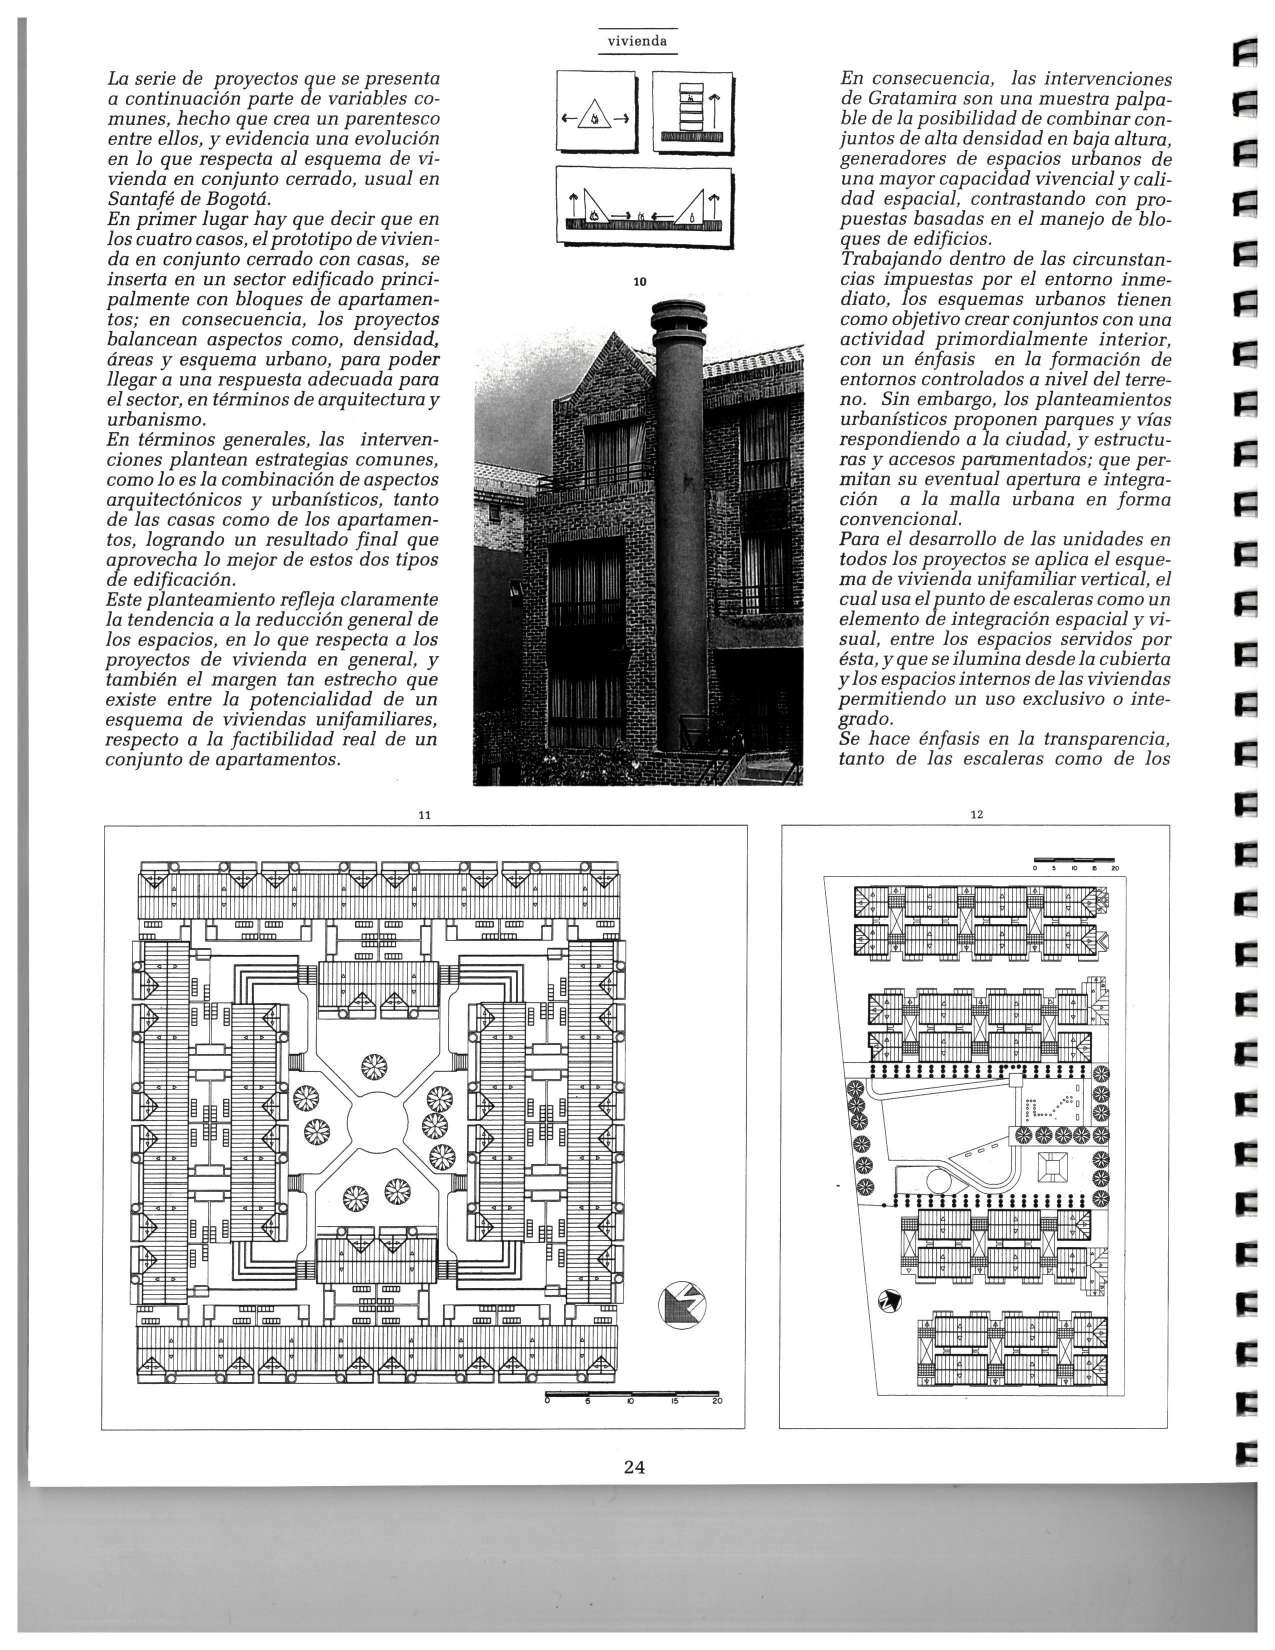 1995_Obra Contexto Urbano_Revista PROA_compressed_page-0024.jpg